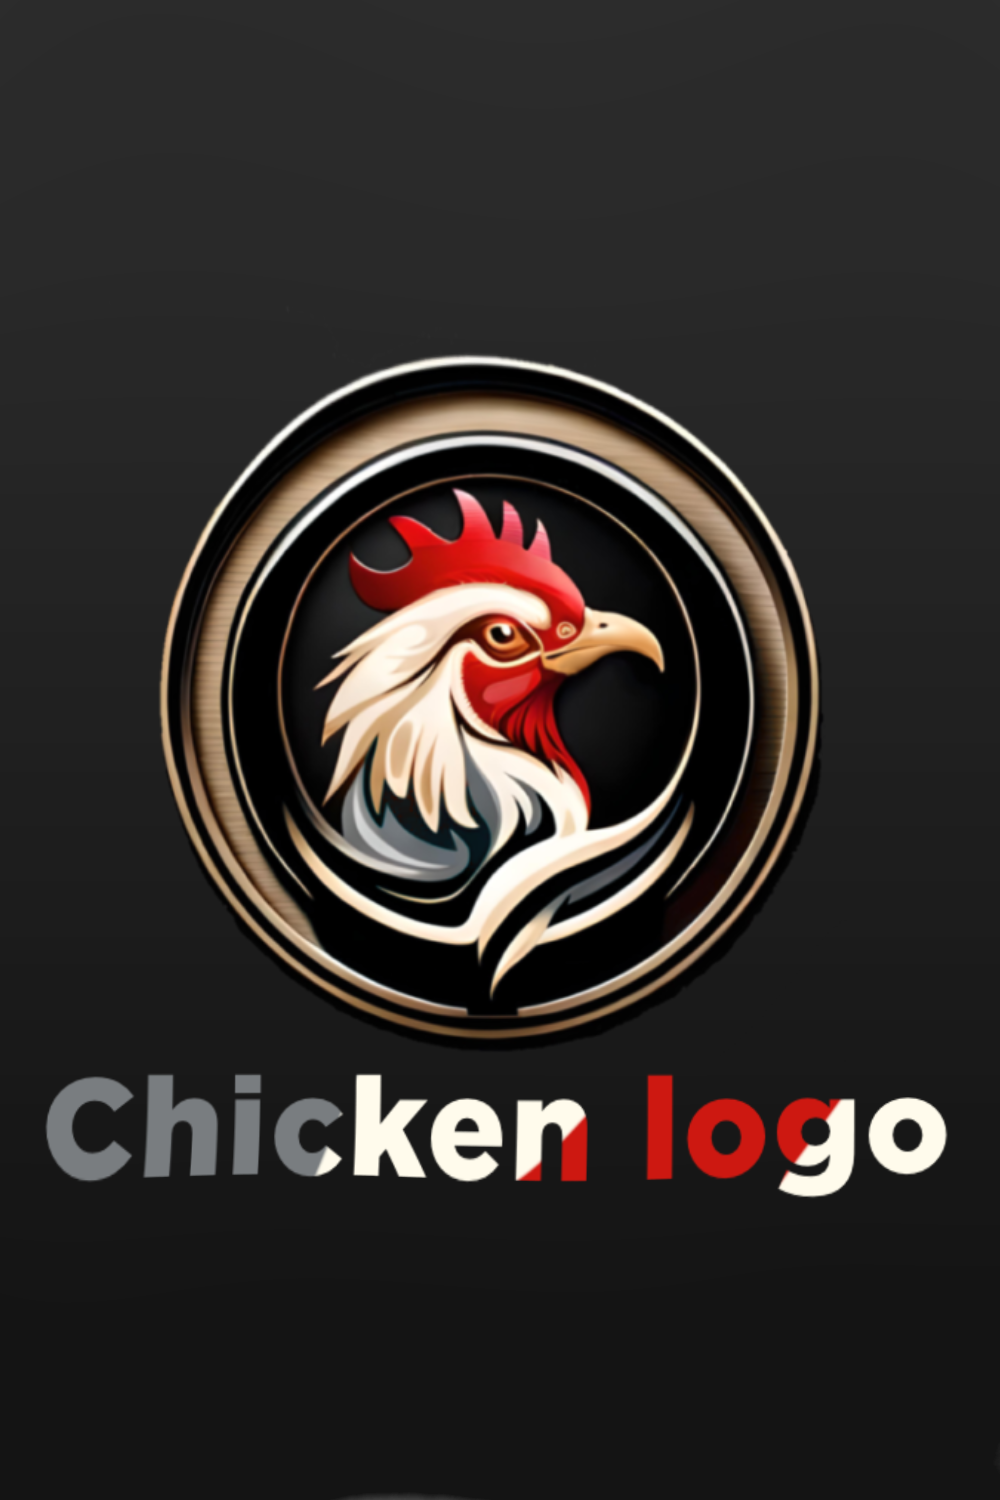 Chicken logo pinterest preview image.